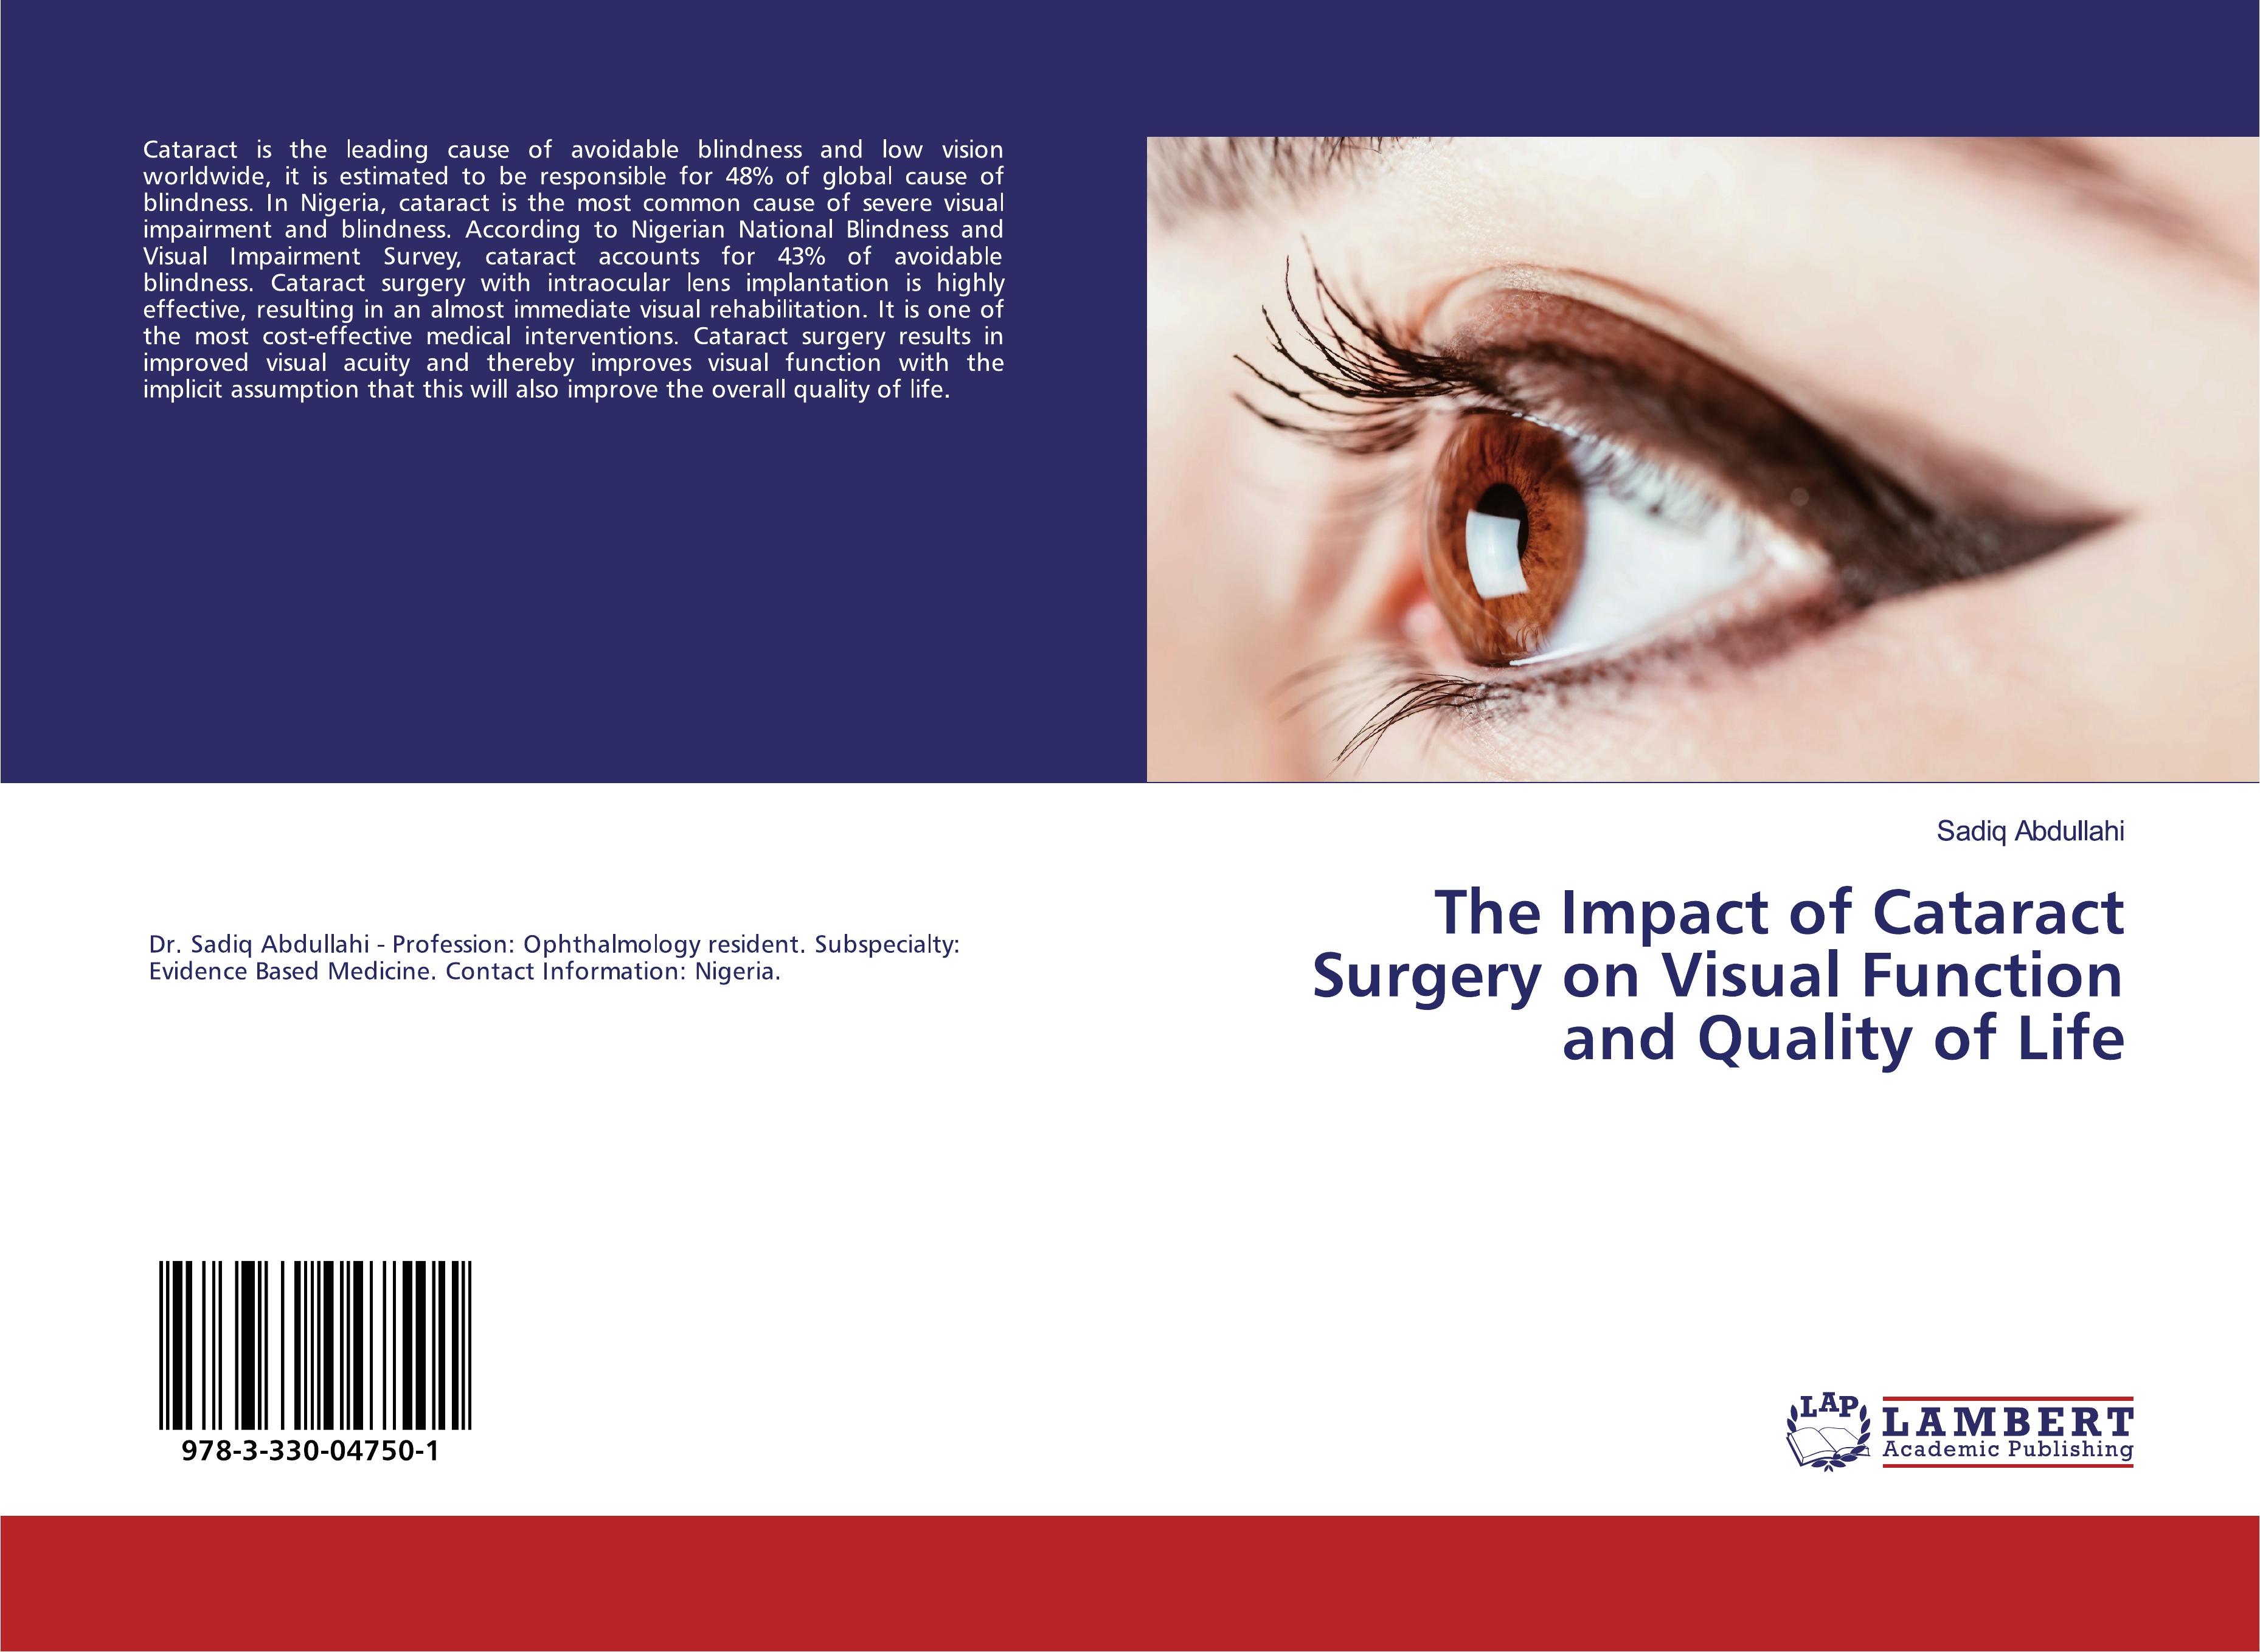 The Impact of Cataract Surgery on Visual Function and Quality of Life - Sadiq Abdullahi